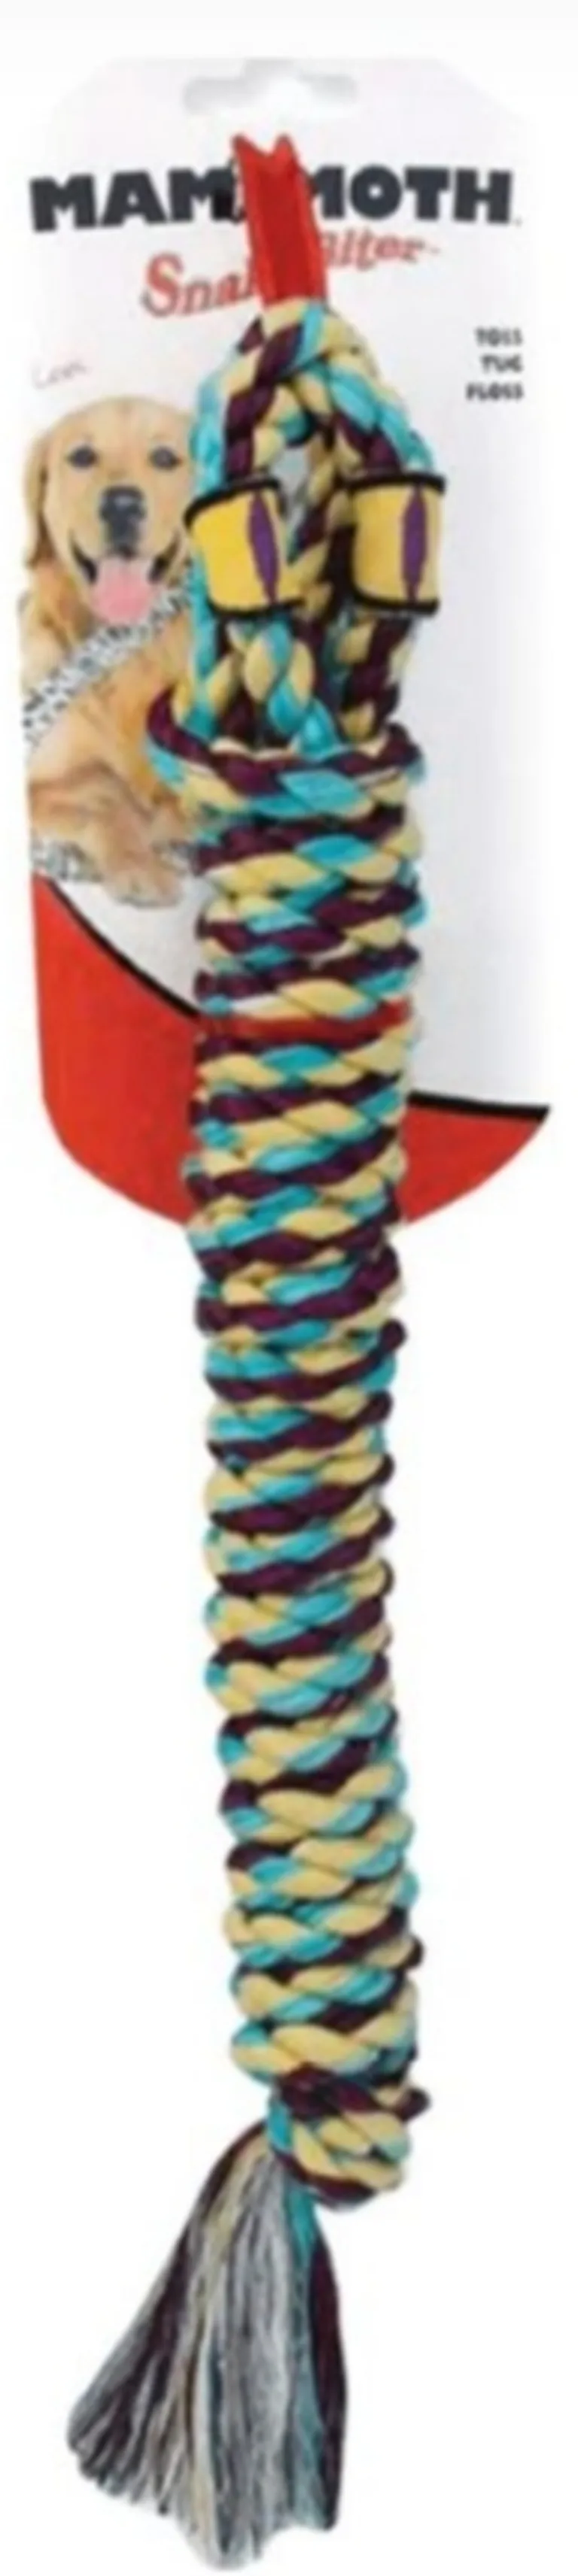 Mammoth Snakebiter Shorty Rope Tug Dog Toy Photo 1